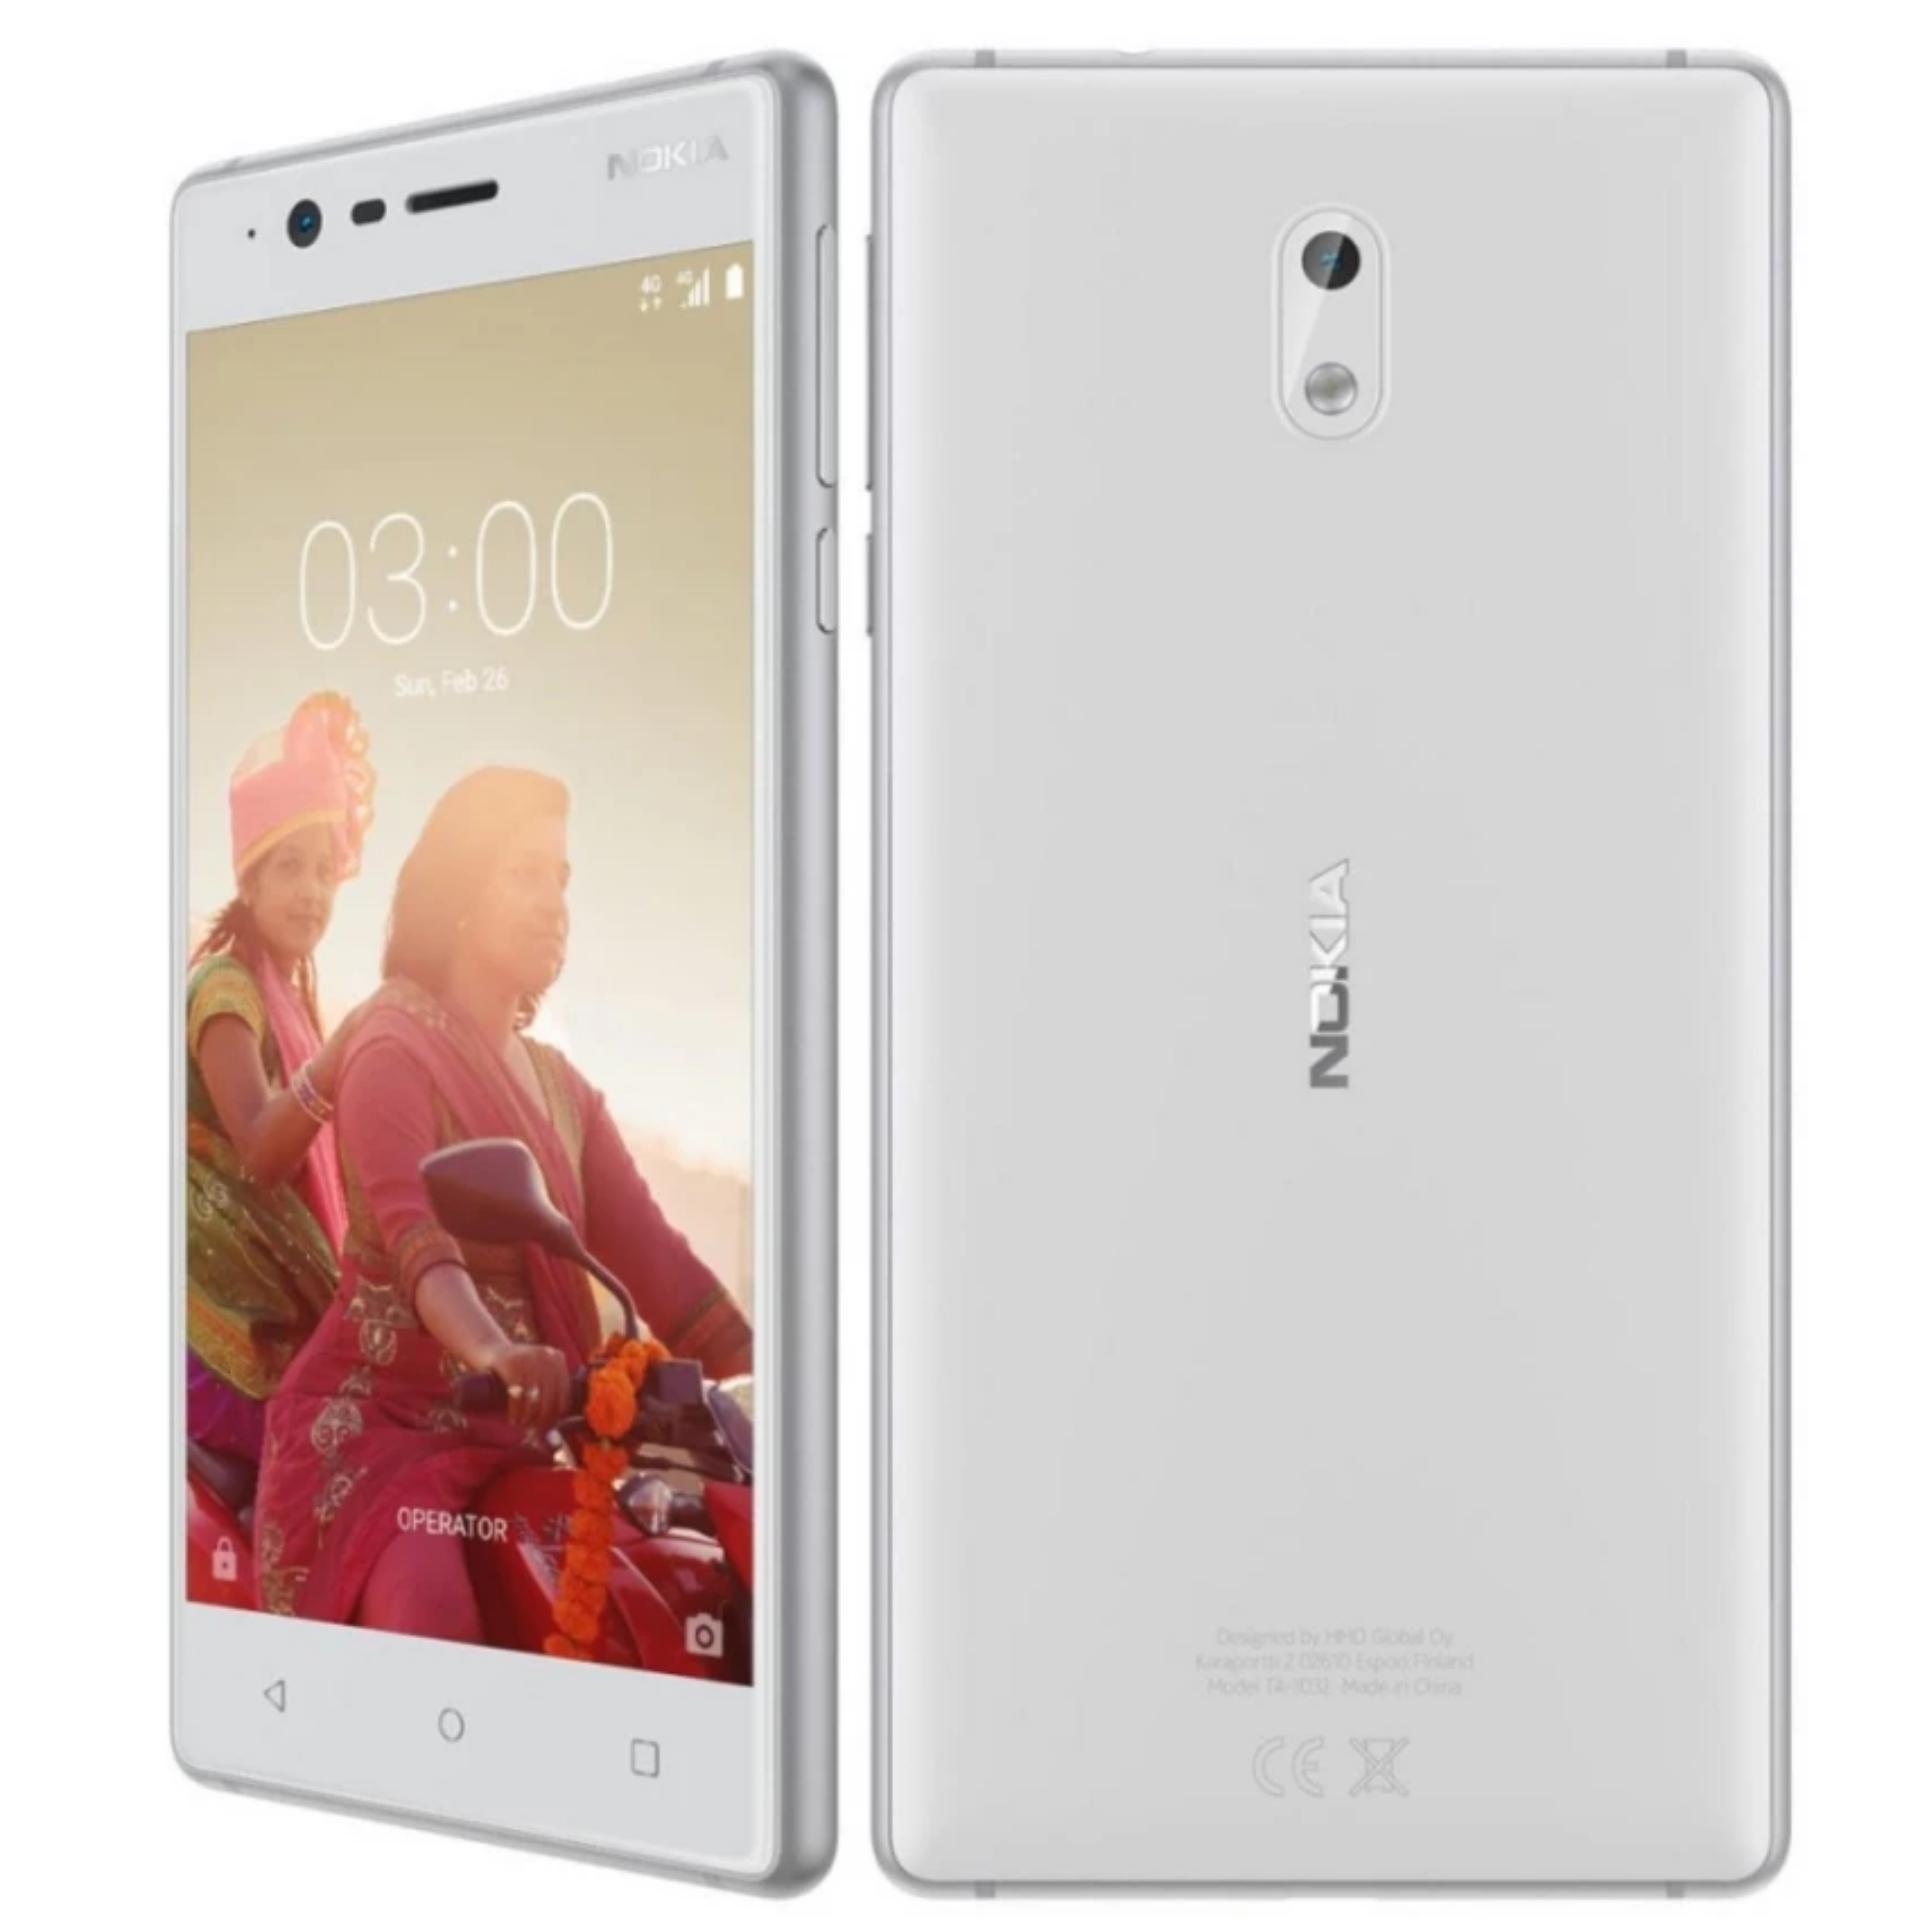 Nokia 3 Android - Ram 2GB/16GB - Copper White